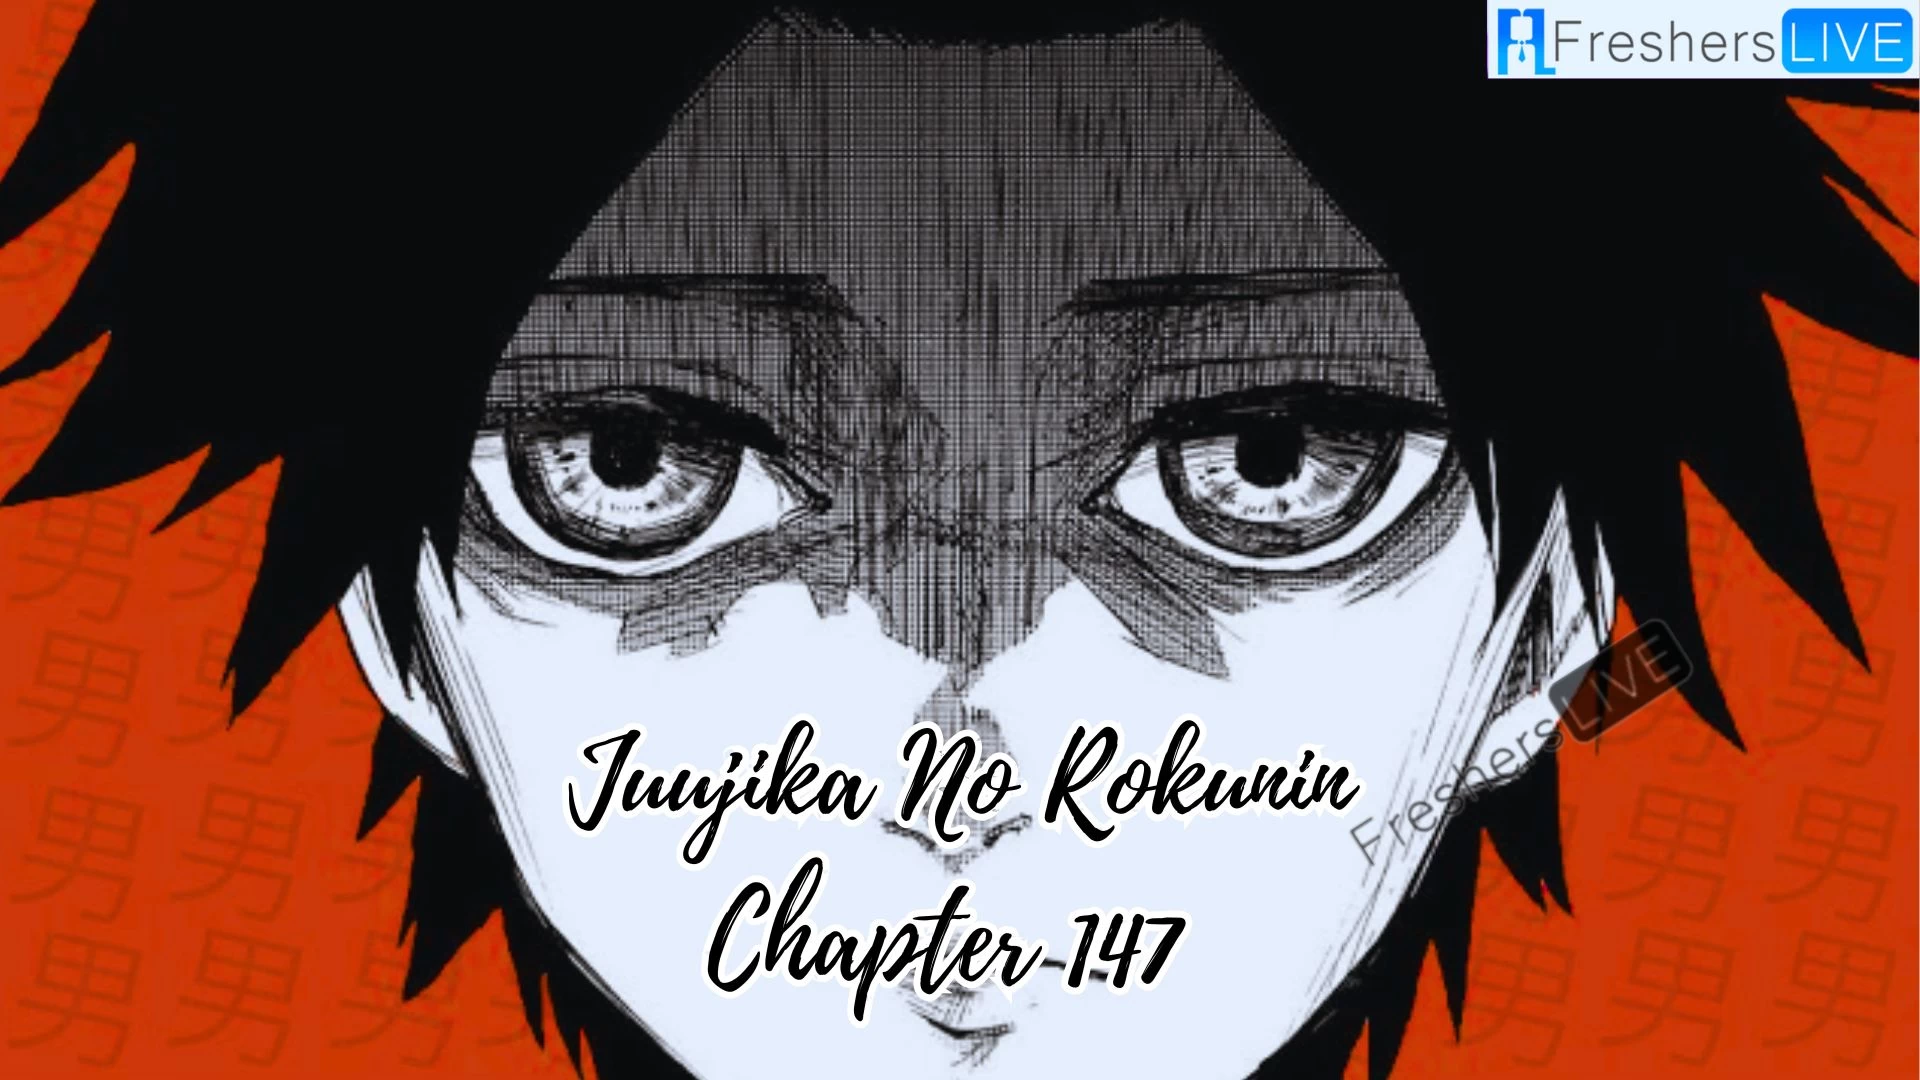 Juujika No Rokunin Chapter 147 Spoiler, Release Date, Raw Scan, and More